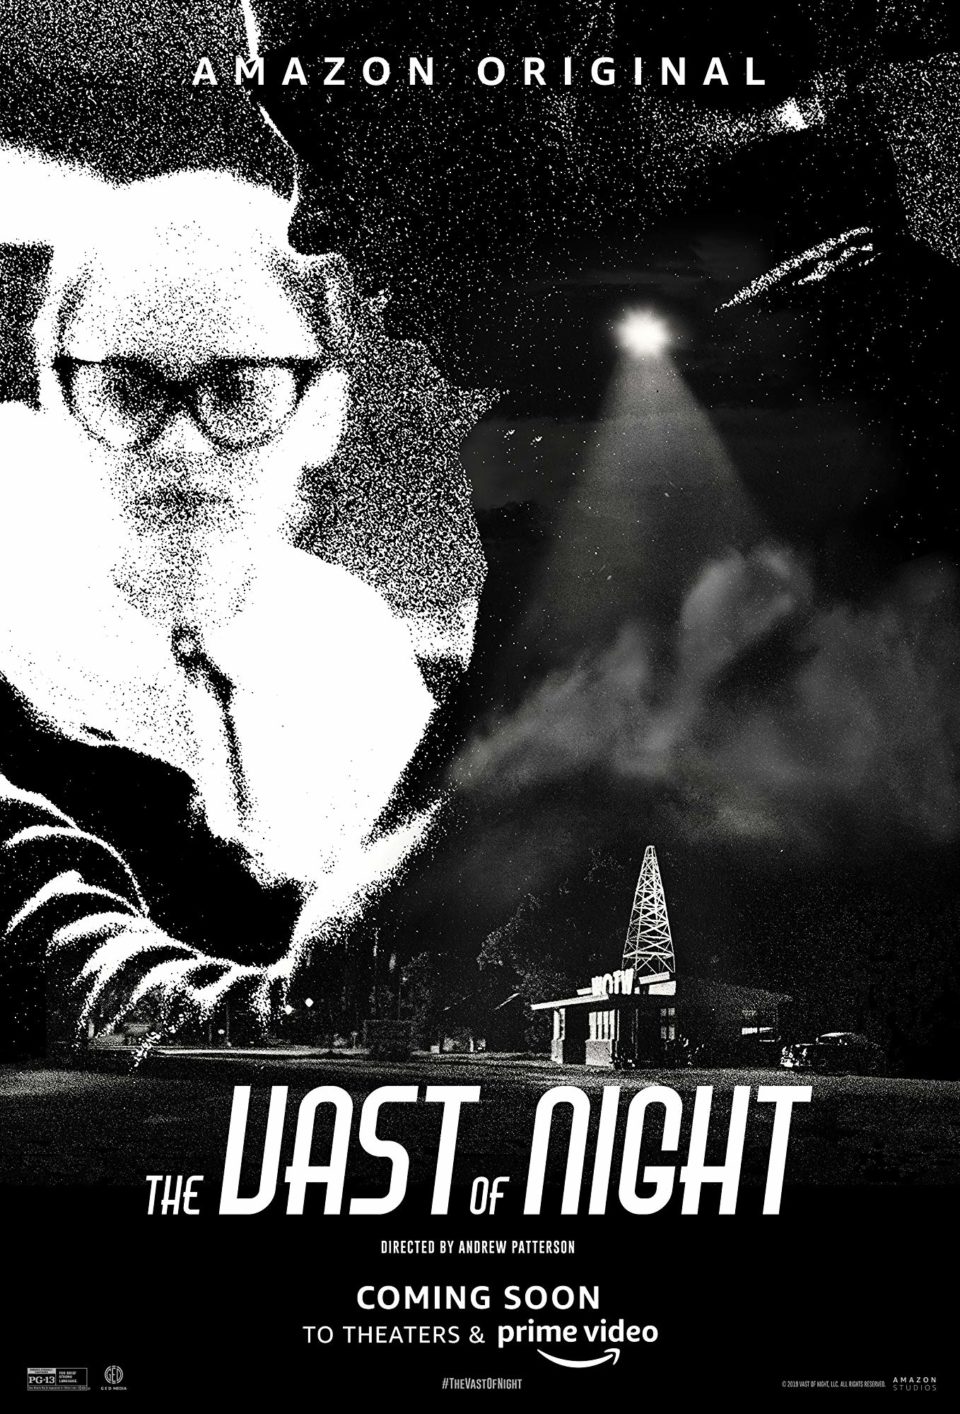 The Vast of Night - Teaser Poster